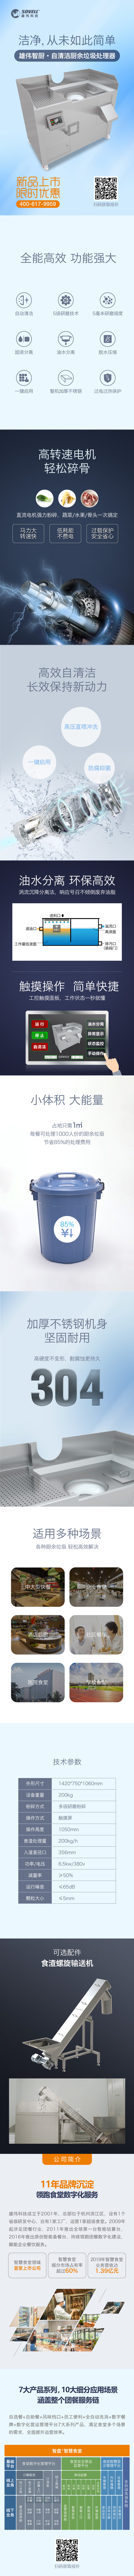 B2B长图-垃圾处理器-中国厨房设备网.jpg